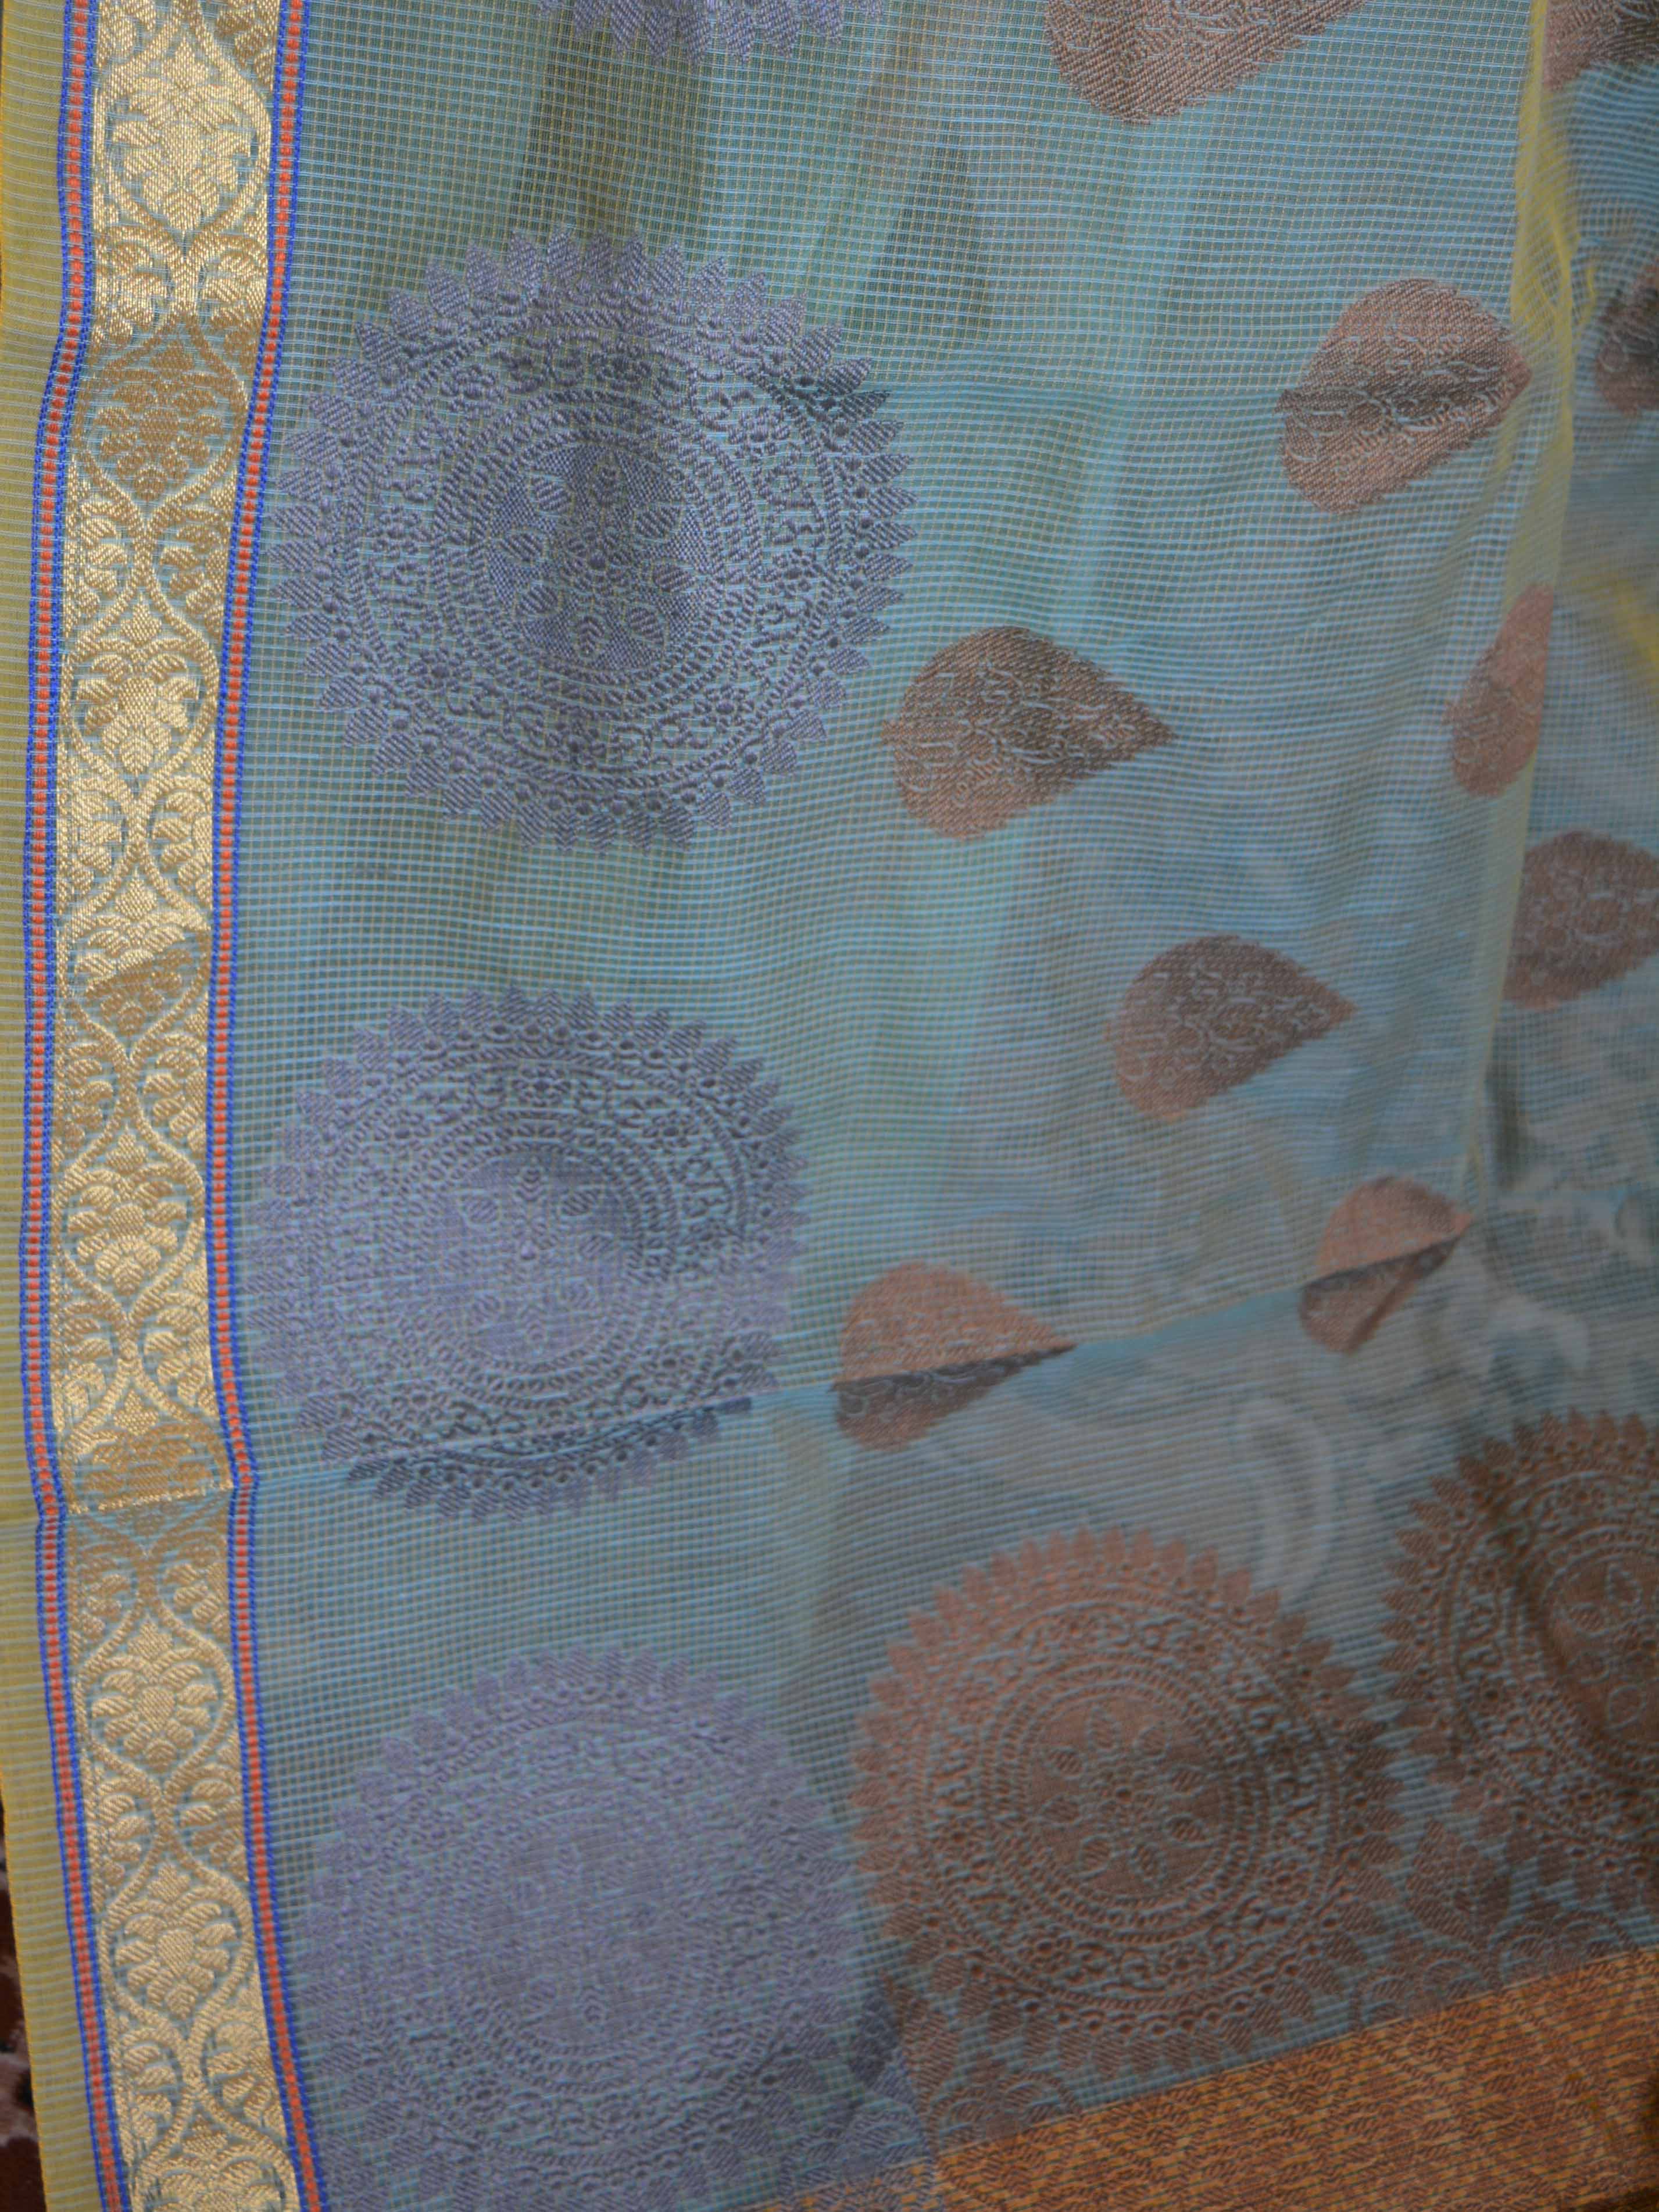 Banarasee Cotton Silk Mix Saree With Big Buta Design-Blue